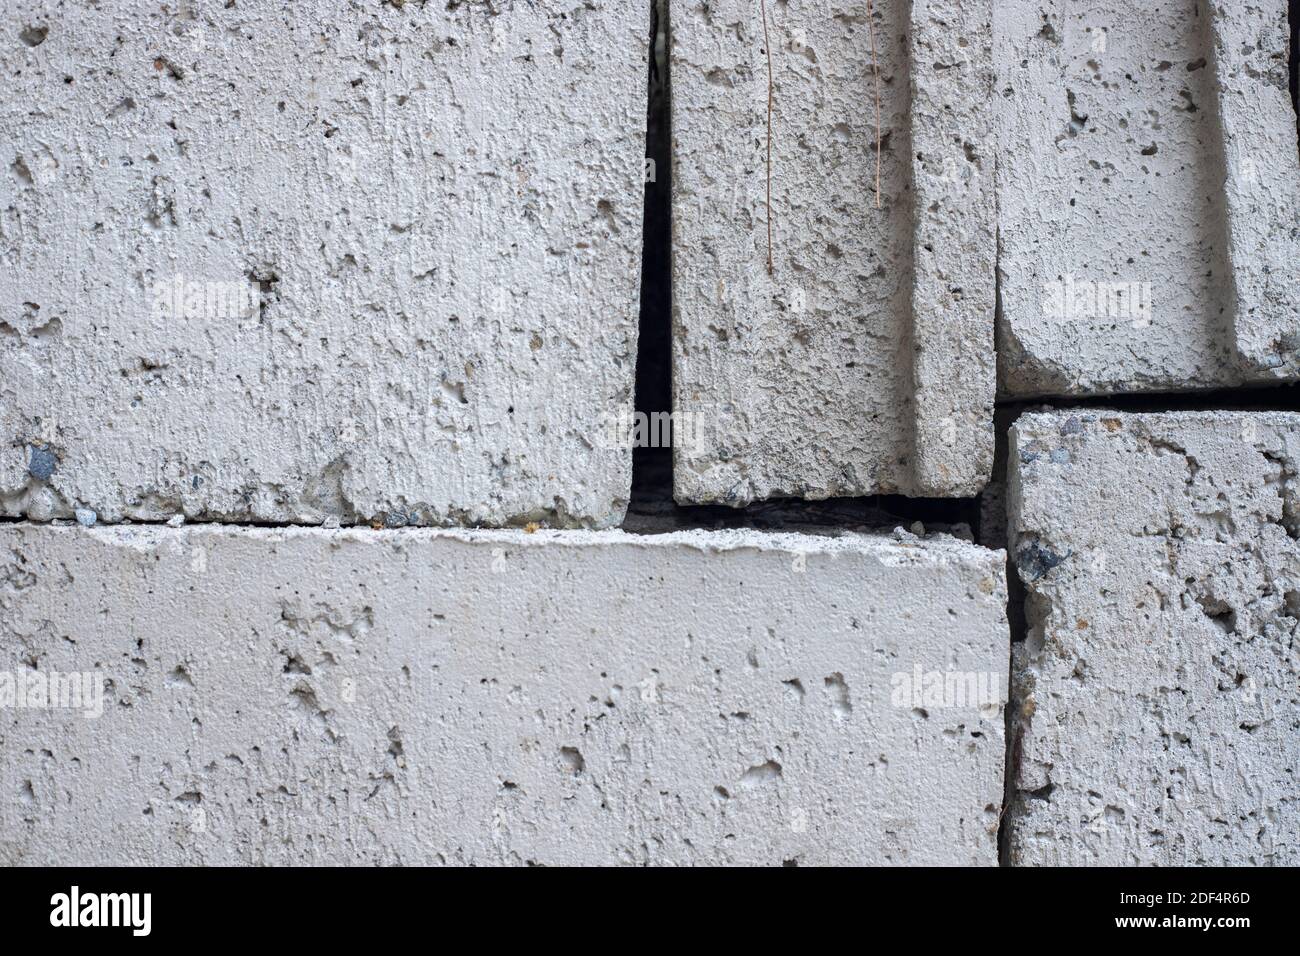 White concrete bricks closeup photo texture. Concrete block surface. Rough grey stone brick. Masonry wall made of big block. Rustic stone texture. Ind Stock Photo